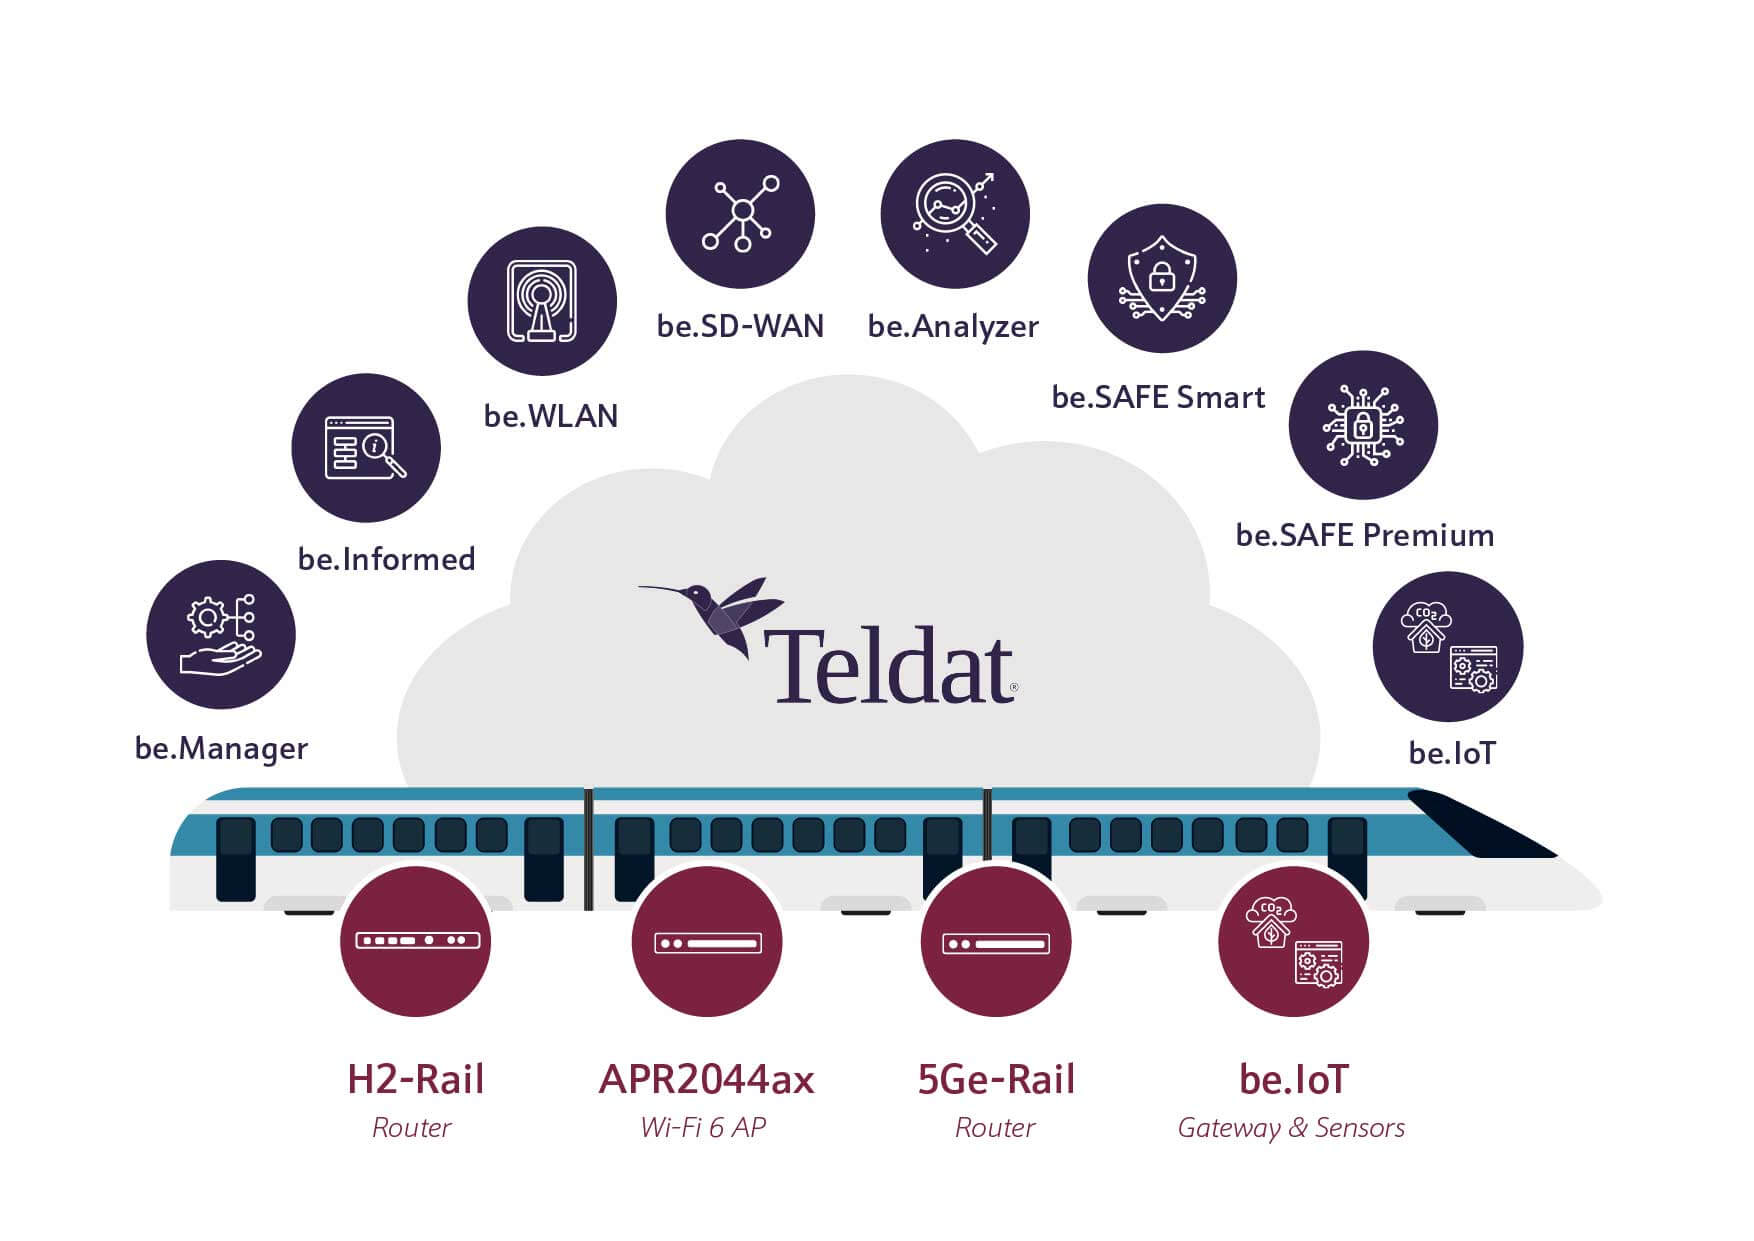 Flota de Trenes soluciones de conectividad,flota de trenes,lte,wifi 6,5g